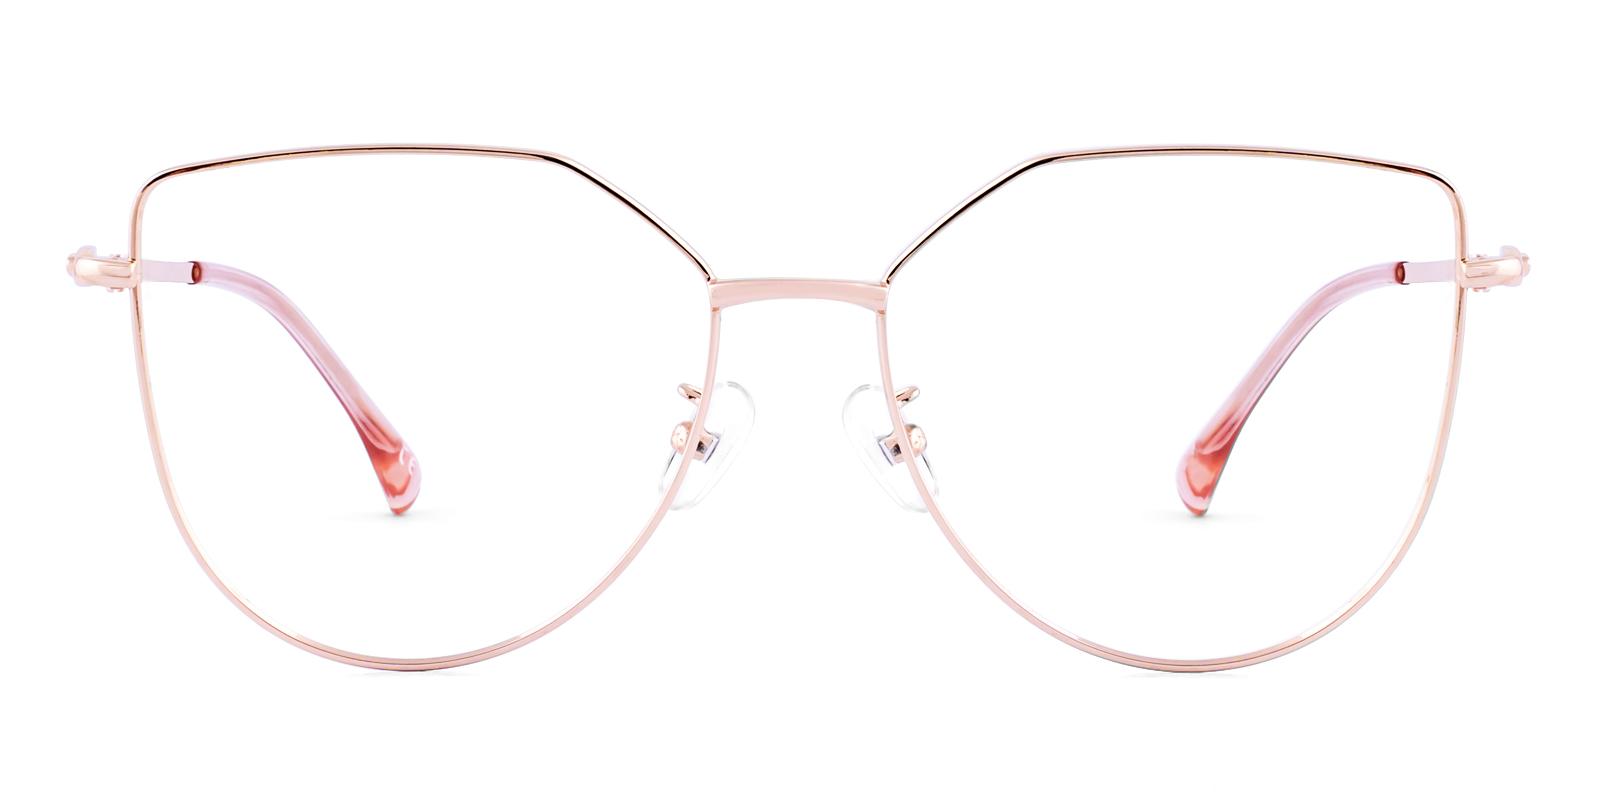 Pastth Rosegold Metal Eyeglasses , NosePads Frames from ABBE Glasses